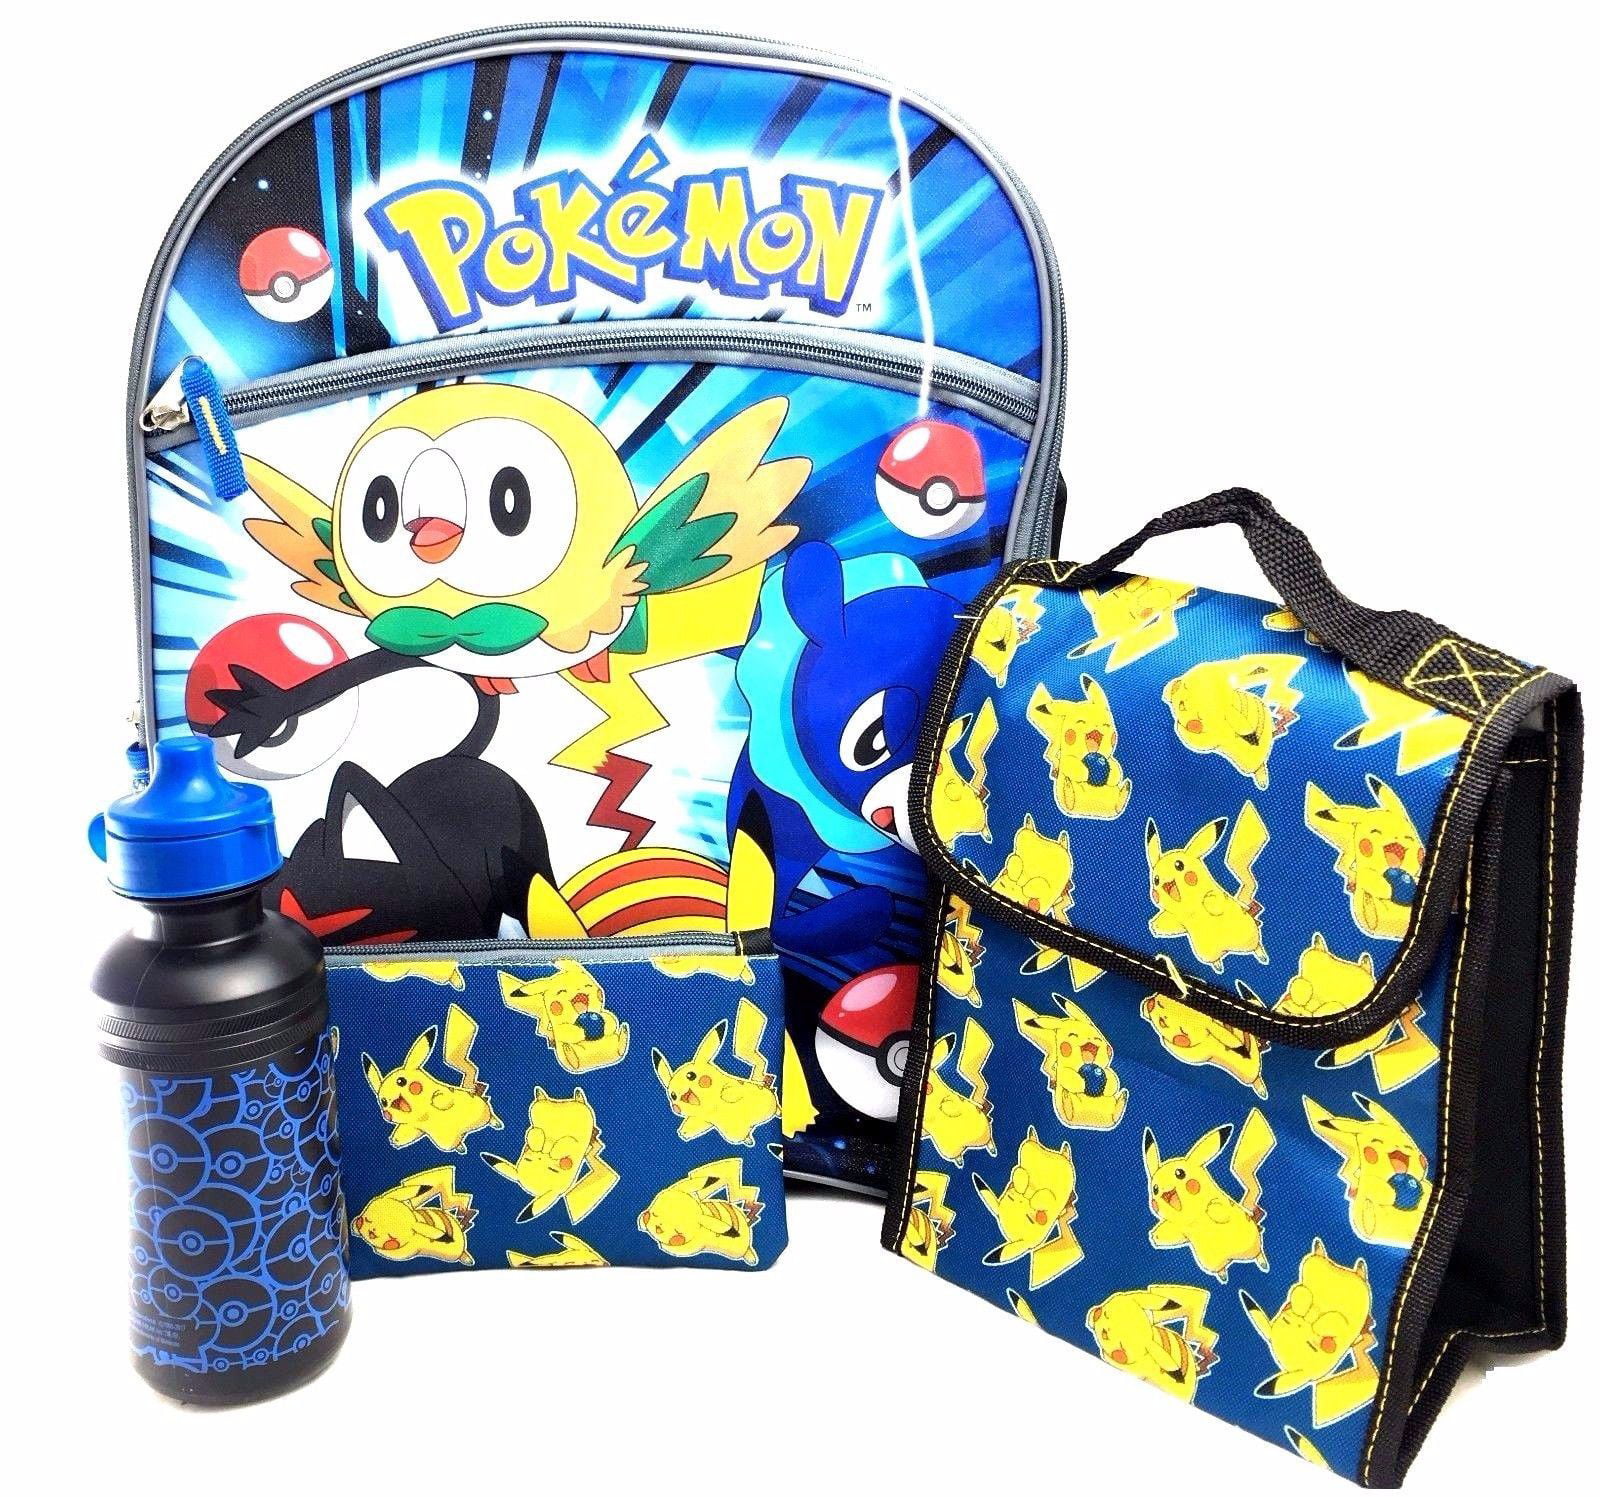 OMKARSY 3pcs Pokemon Pikachu School Backpack Lunch Box